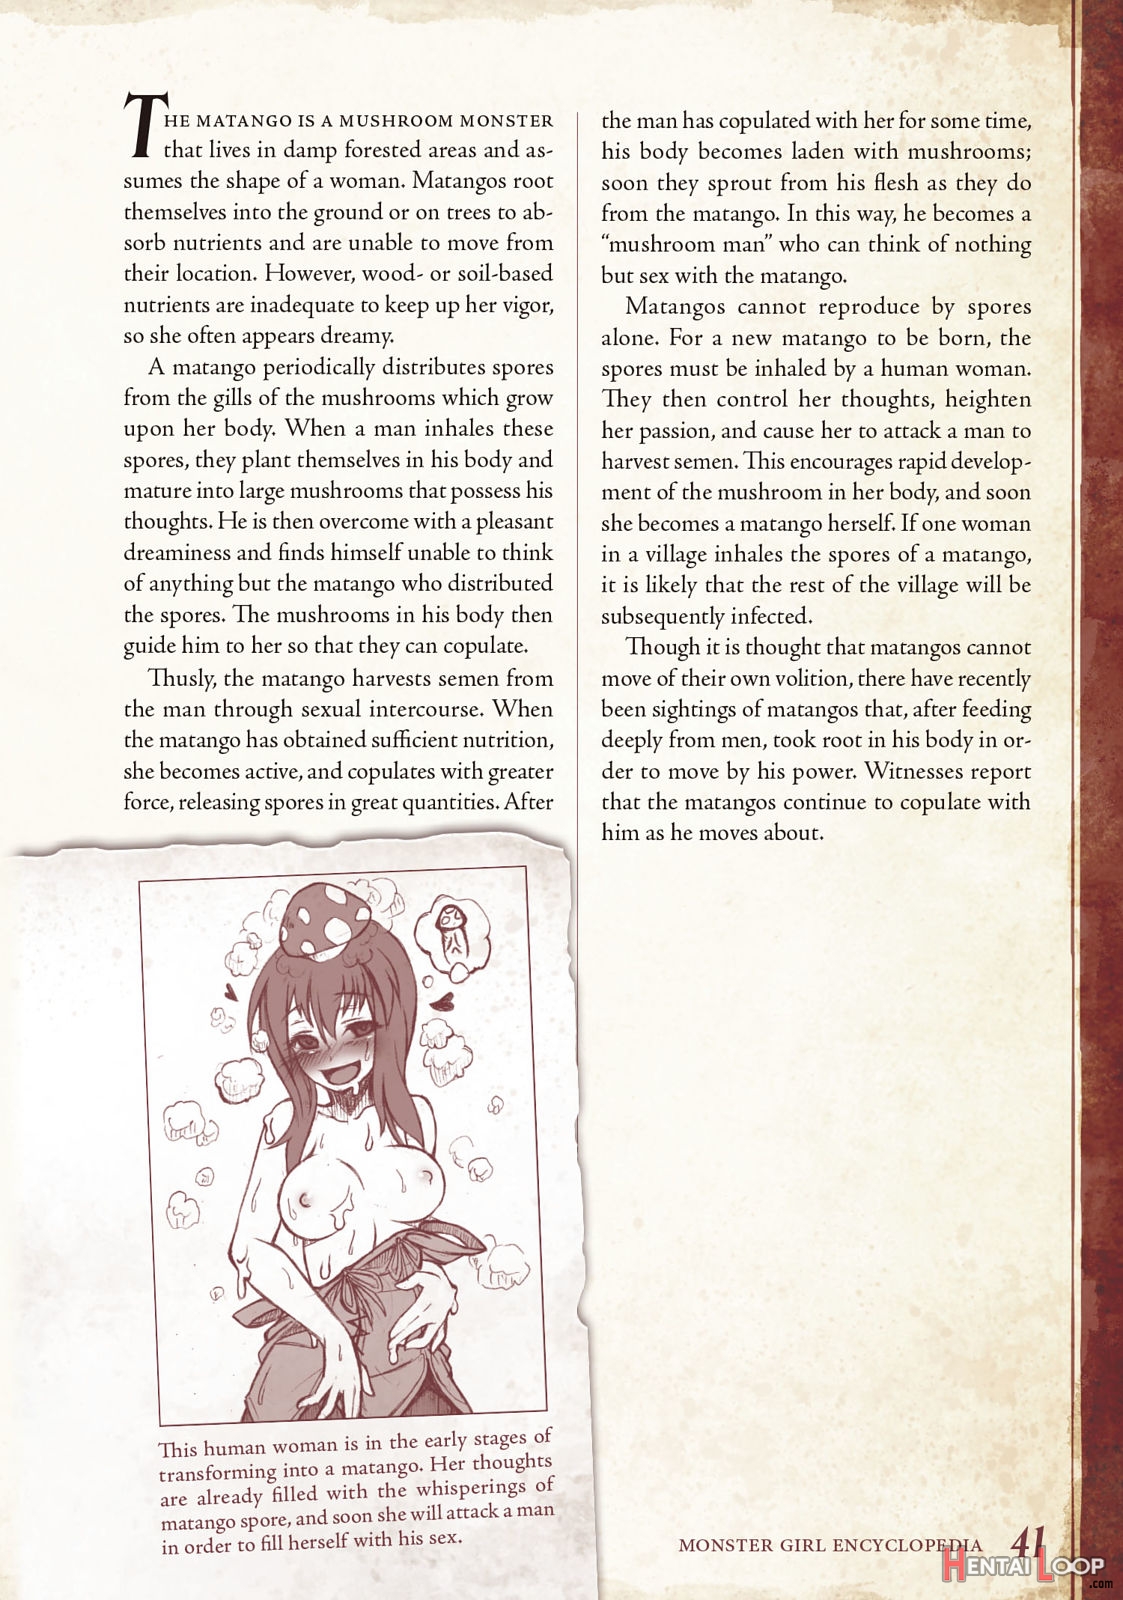 Monster Girl Encyclopedia Vol. 1 page 42